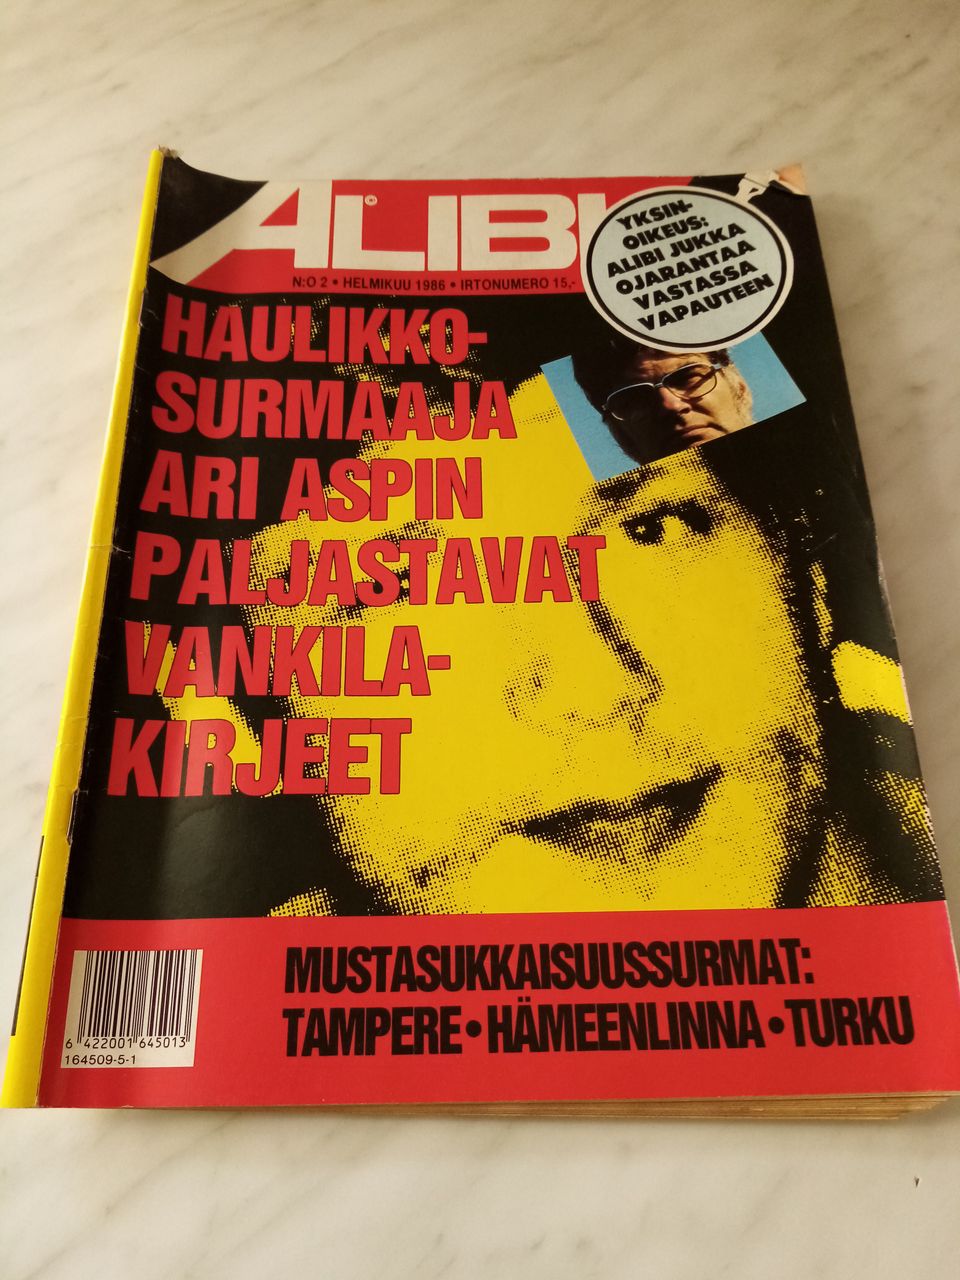 Alibi-lehti 2/1986